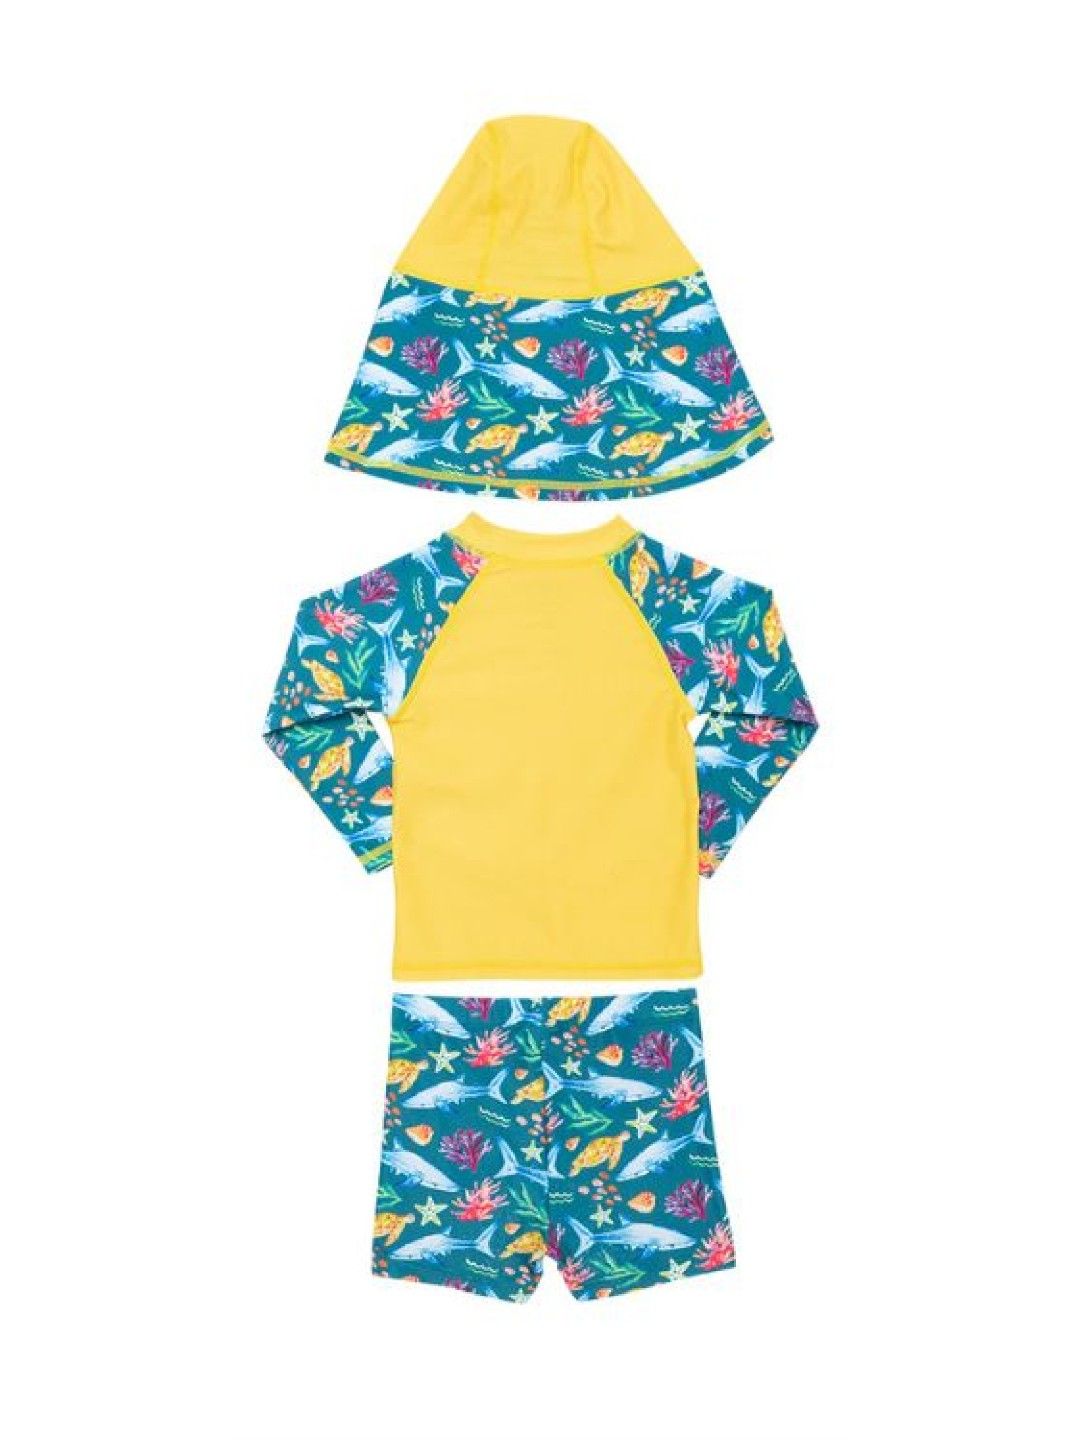 bean fashion Anina Rubio Siargao 3-Piece Long Sleeves Rashguard with Shorts and Cap (Yellow- Image 3)